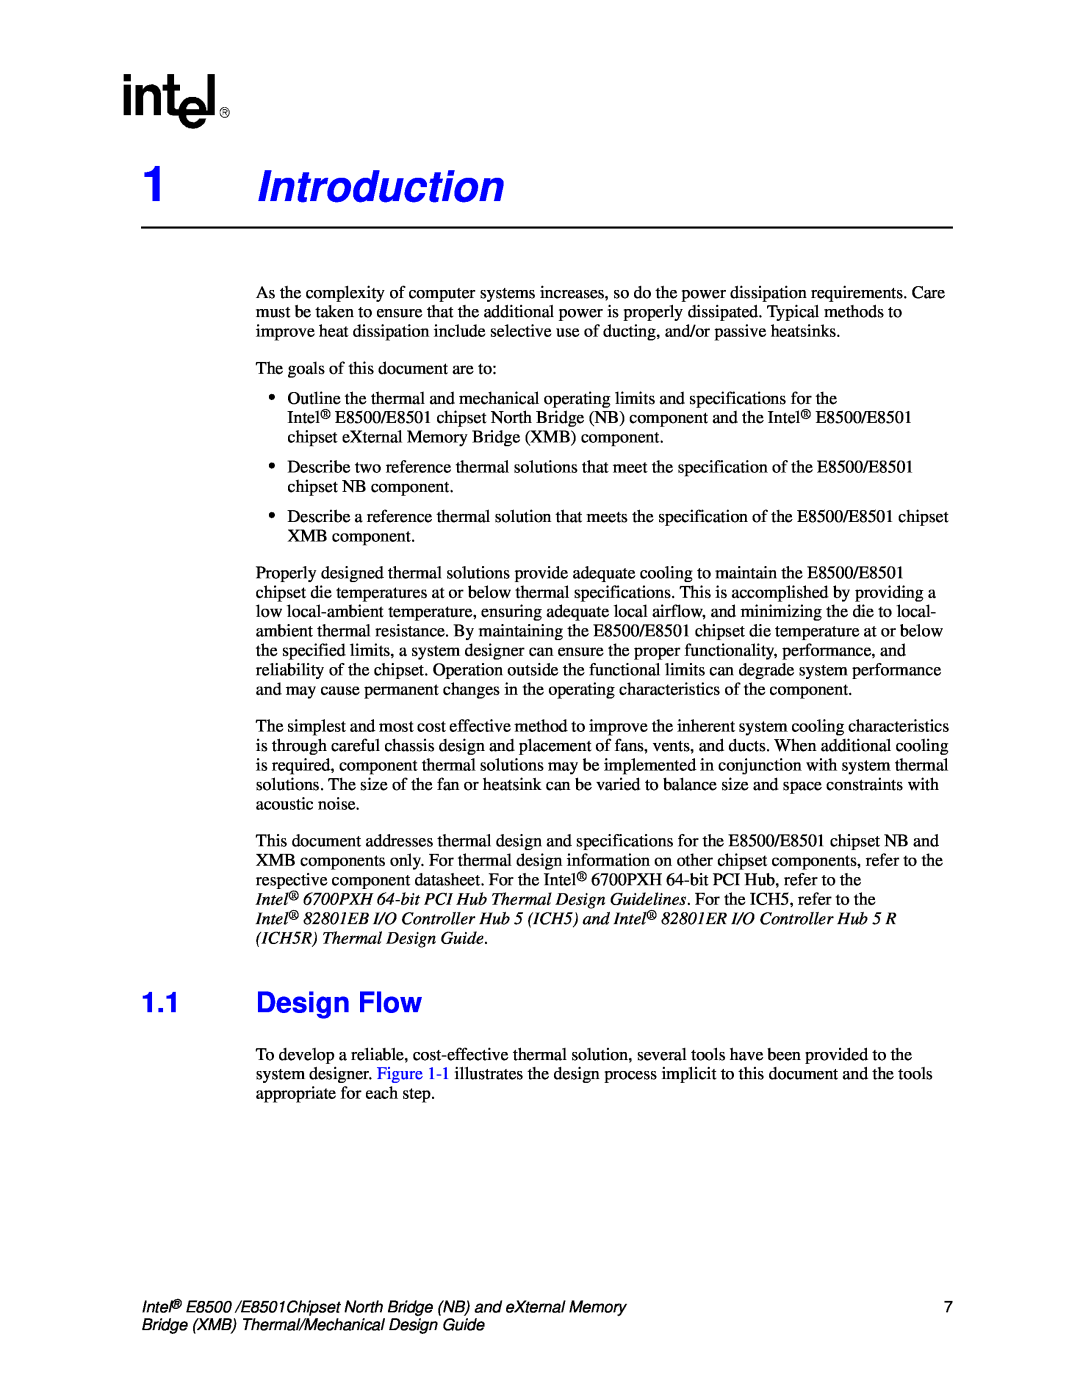 Intel E8501 manual 1Introduction, 1.1Design Flow 